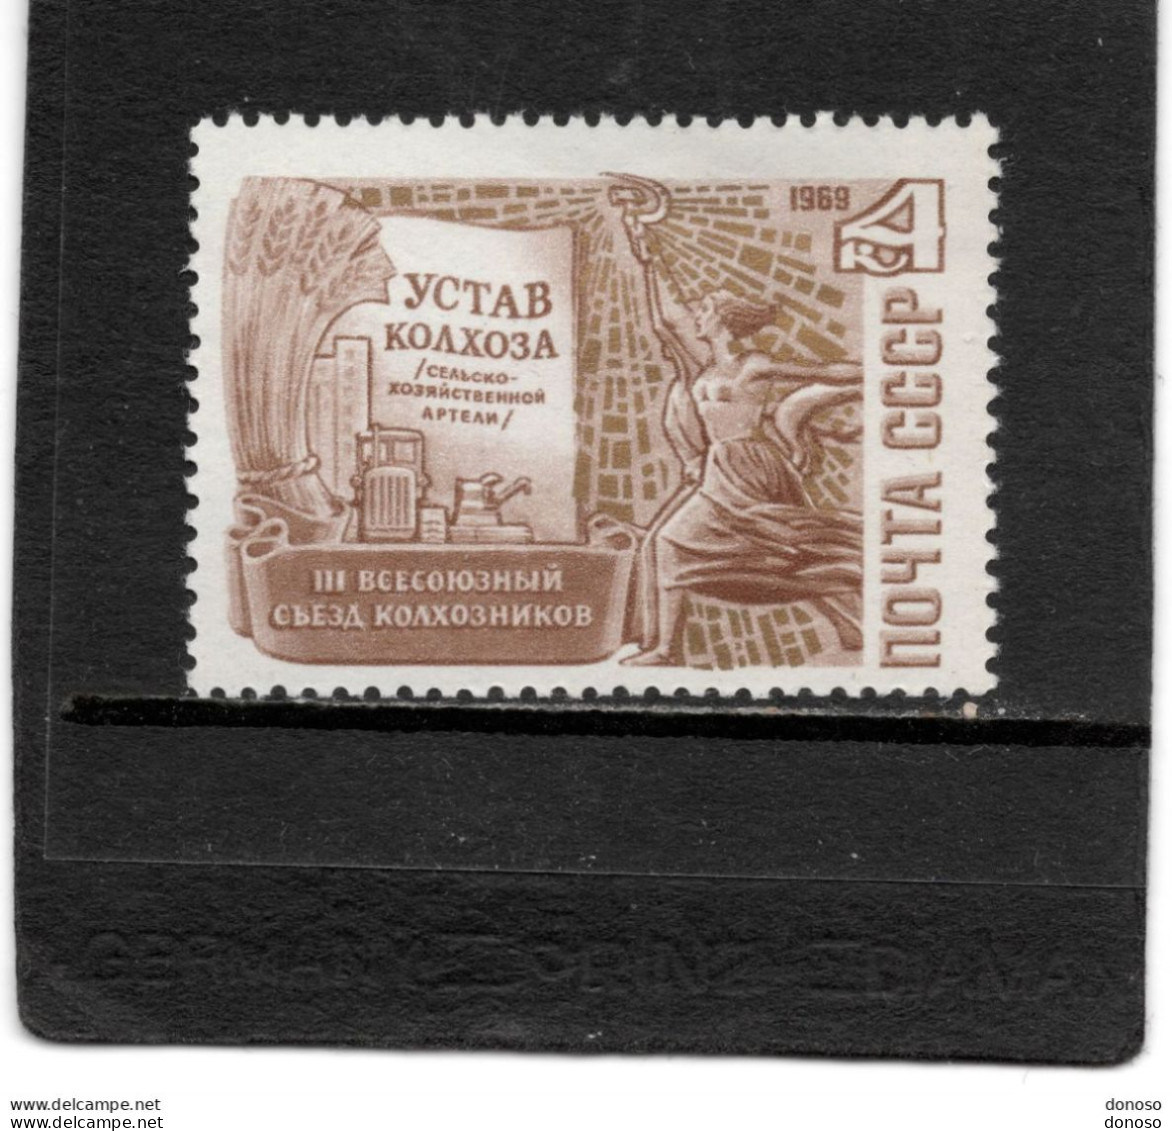 URSS 1969 Congrès Des Kolkhoziens Yvert 3547, Michel 3688 NEUF** MNH - Unused Stamps